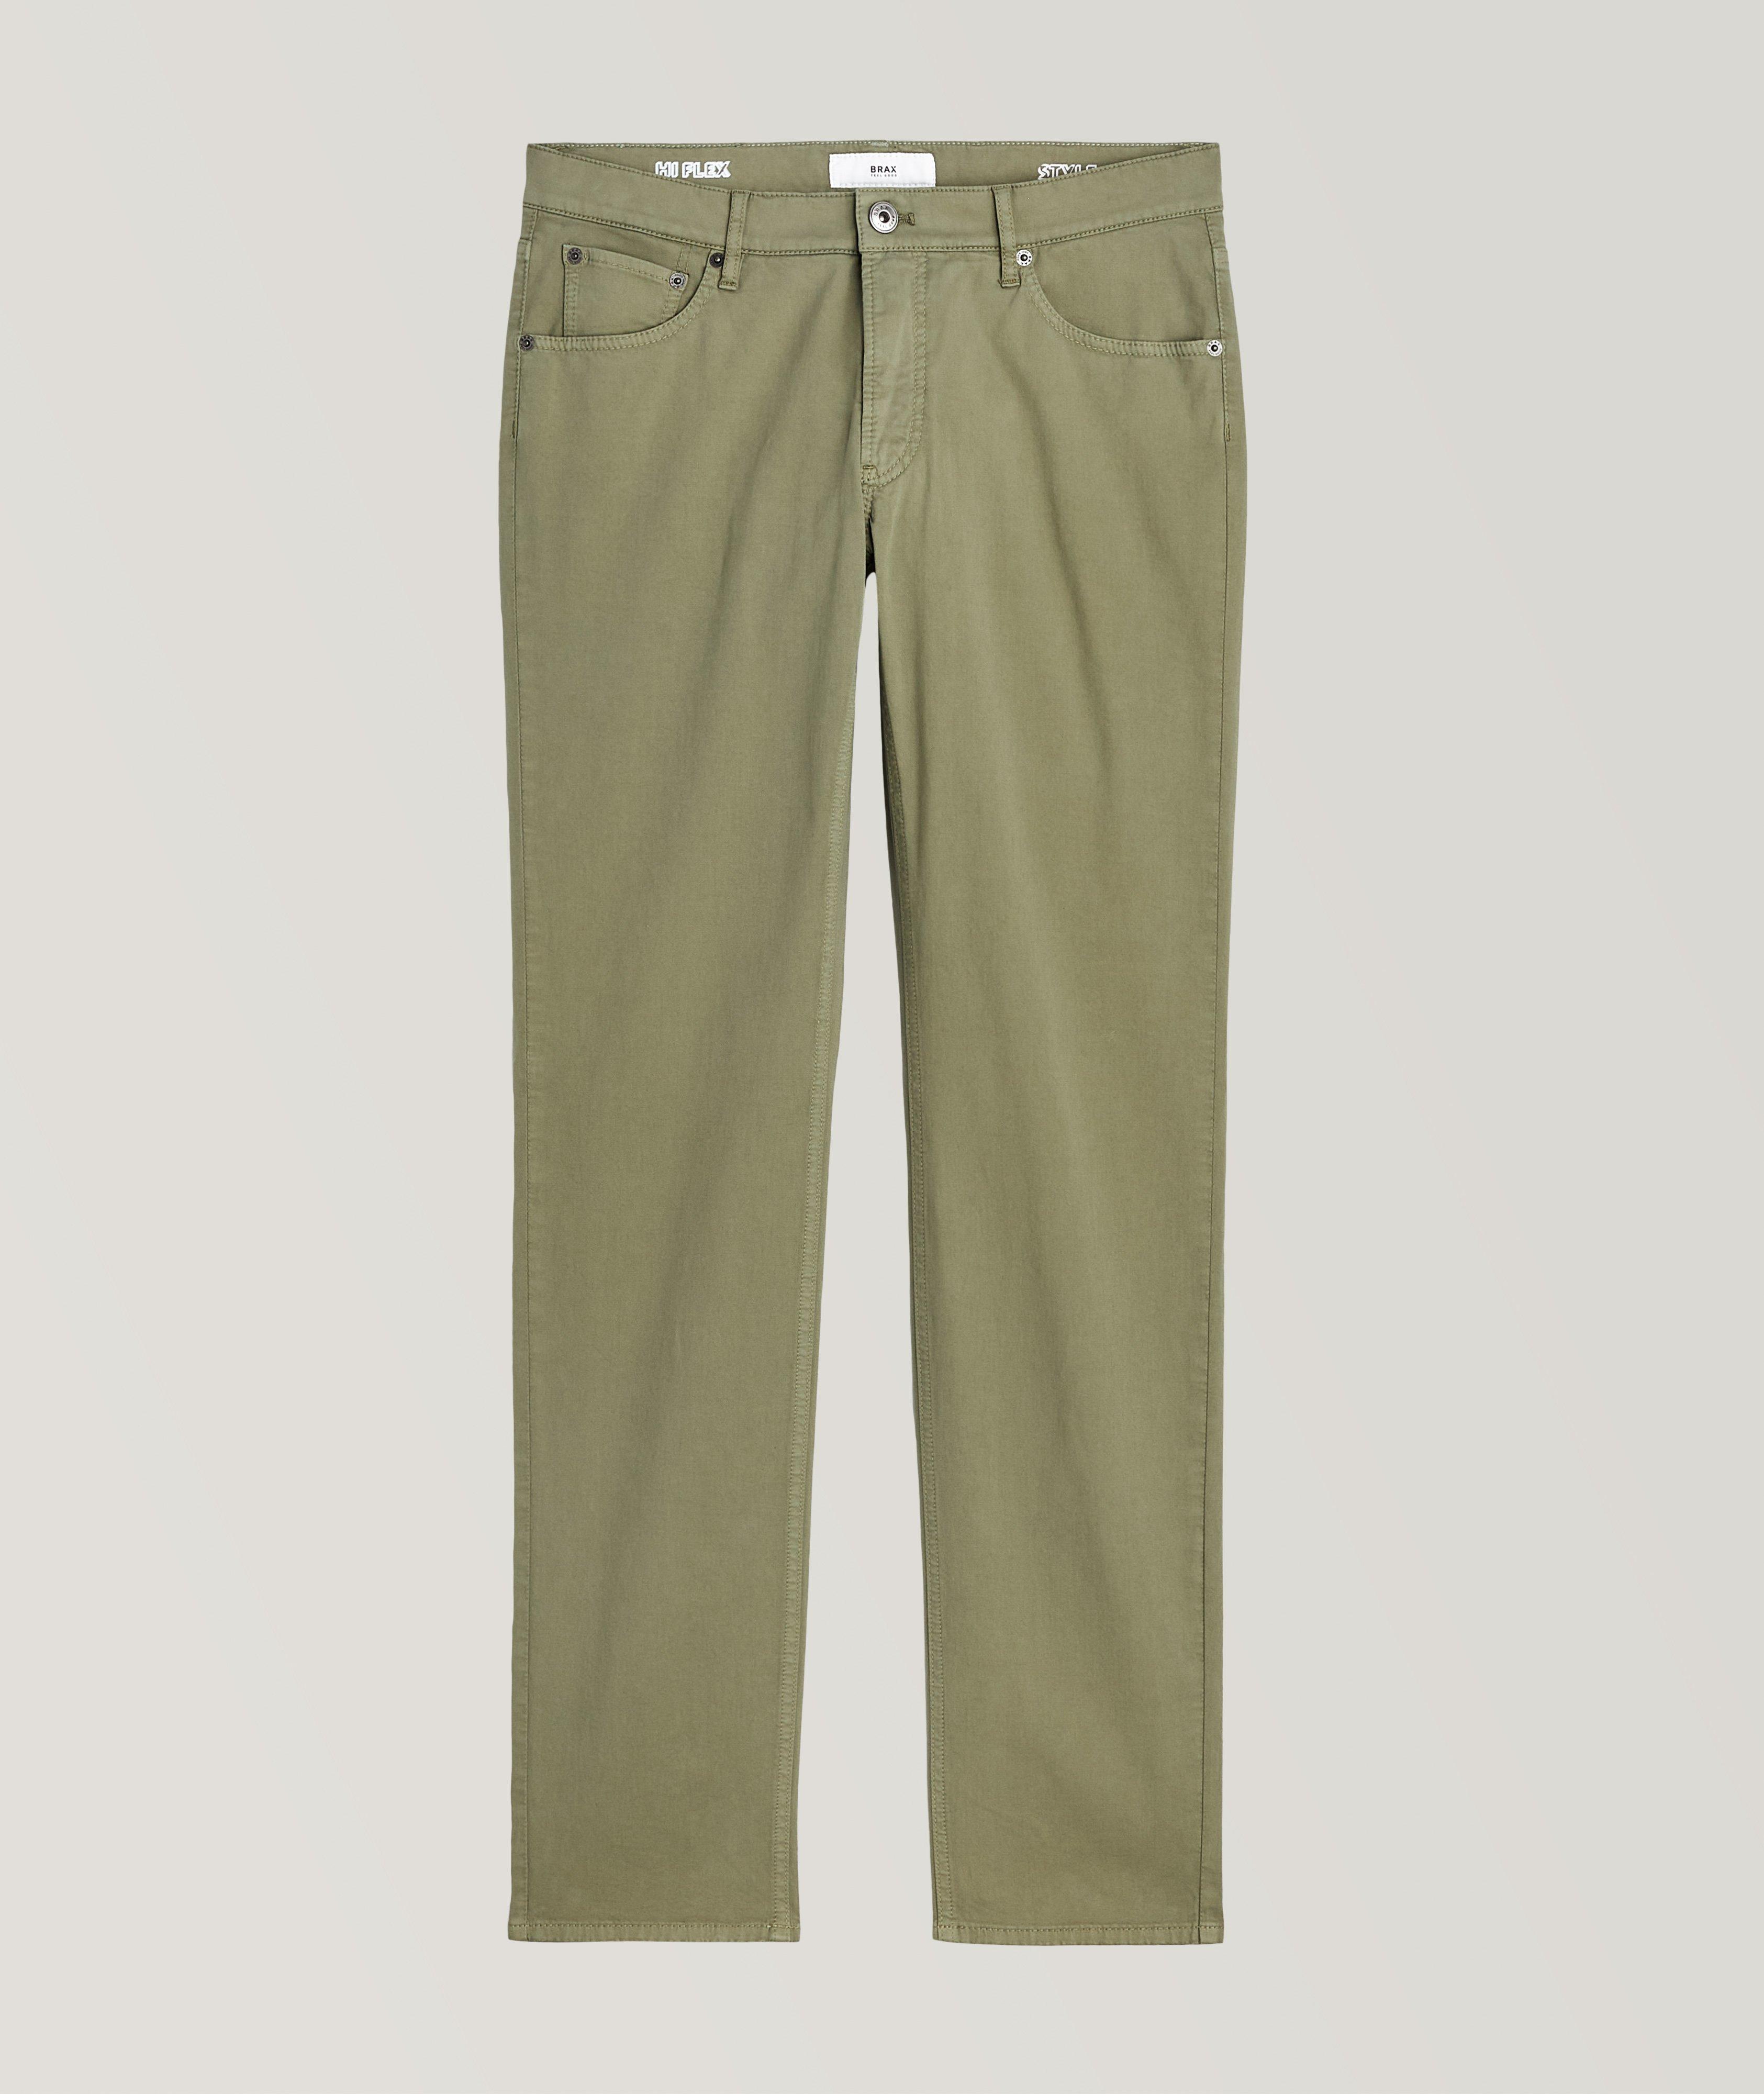 Pantalon Chuck en coton extensible Hi-Flex image 0